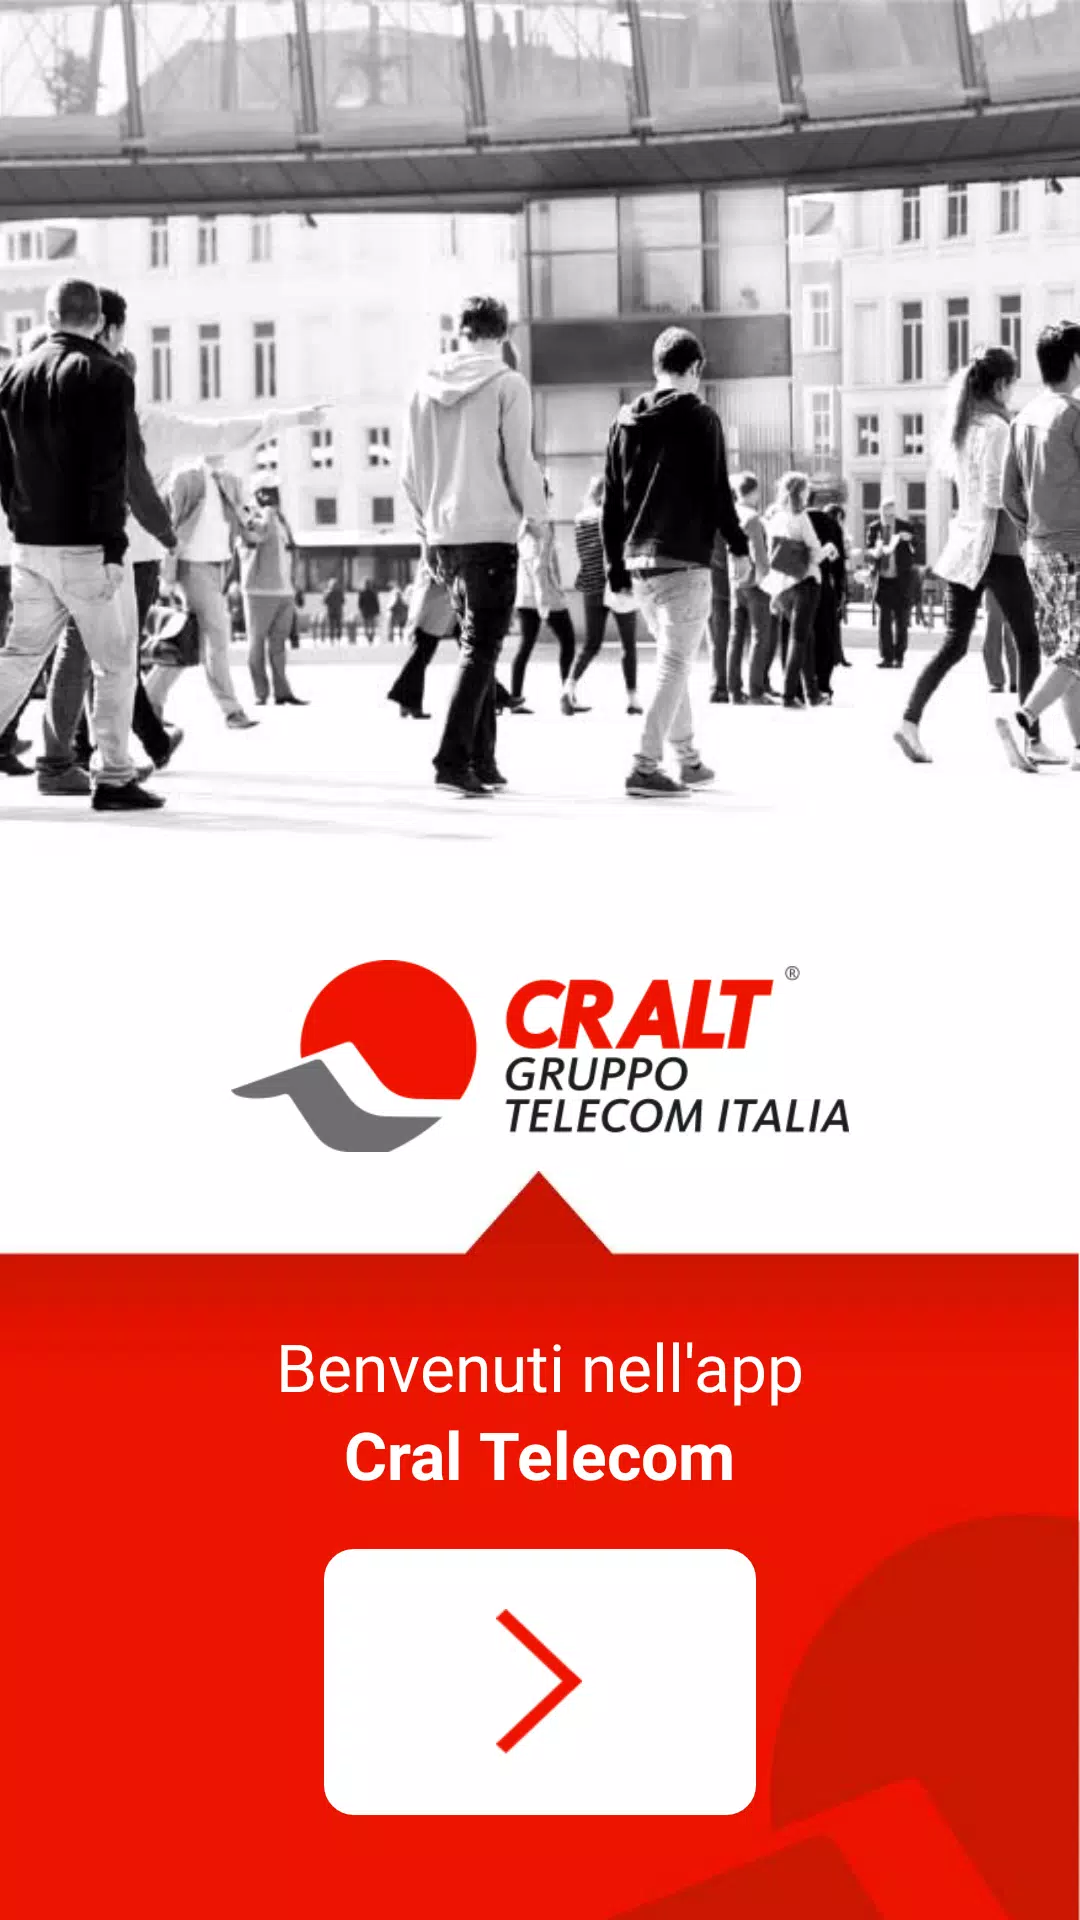 CRALT - Gruppo Telecom Italia APK for Android Download